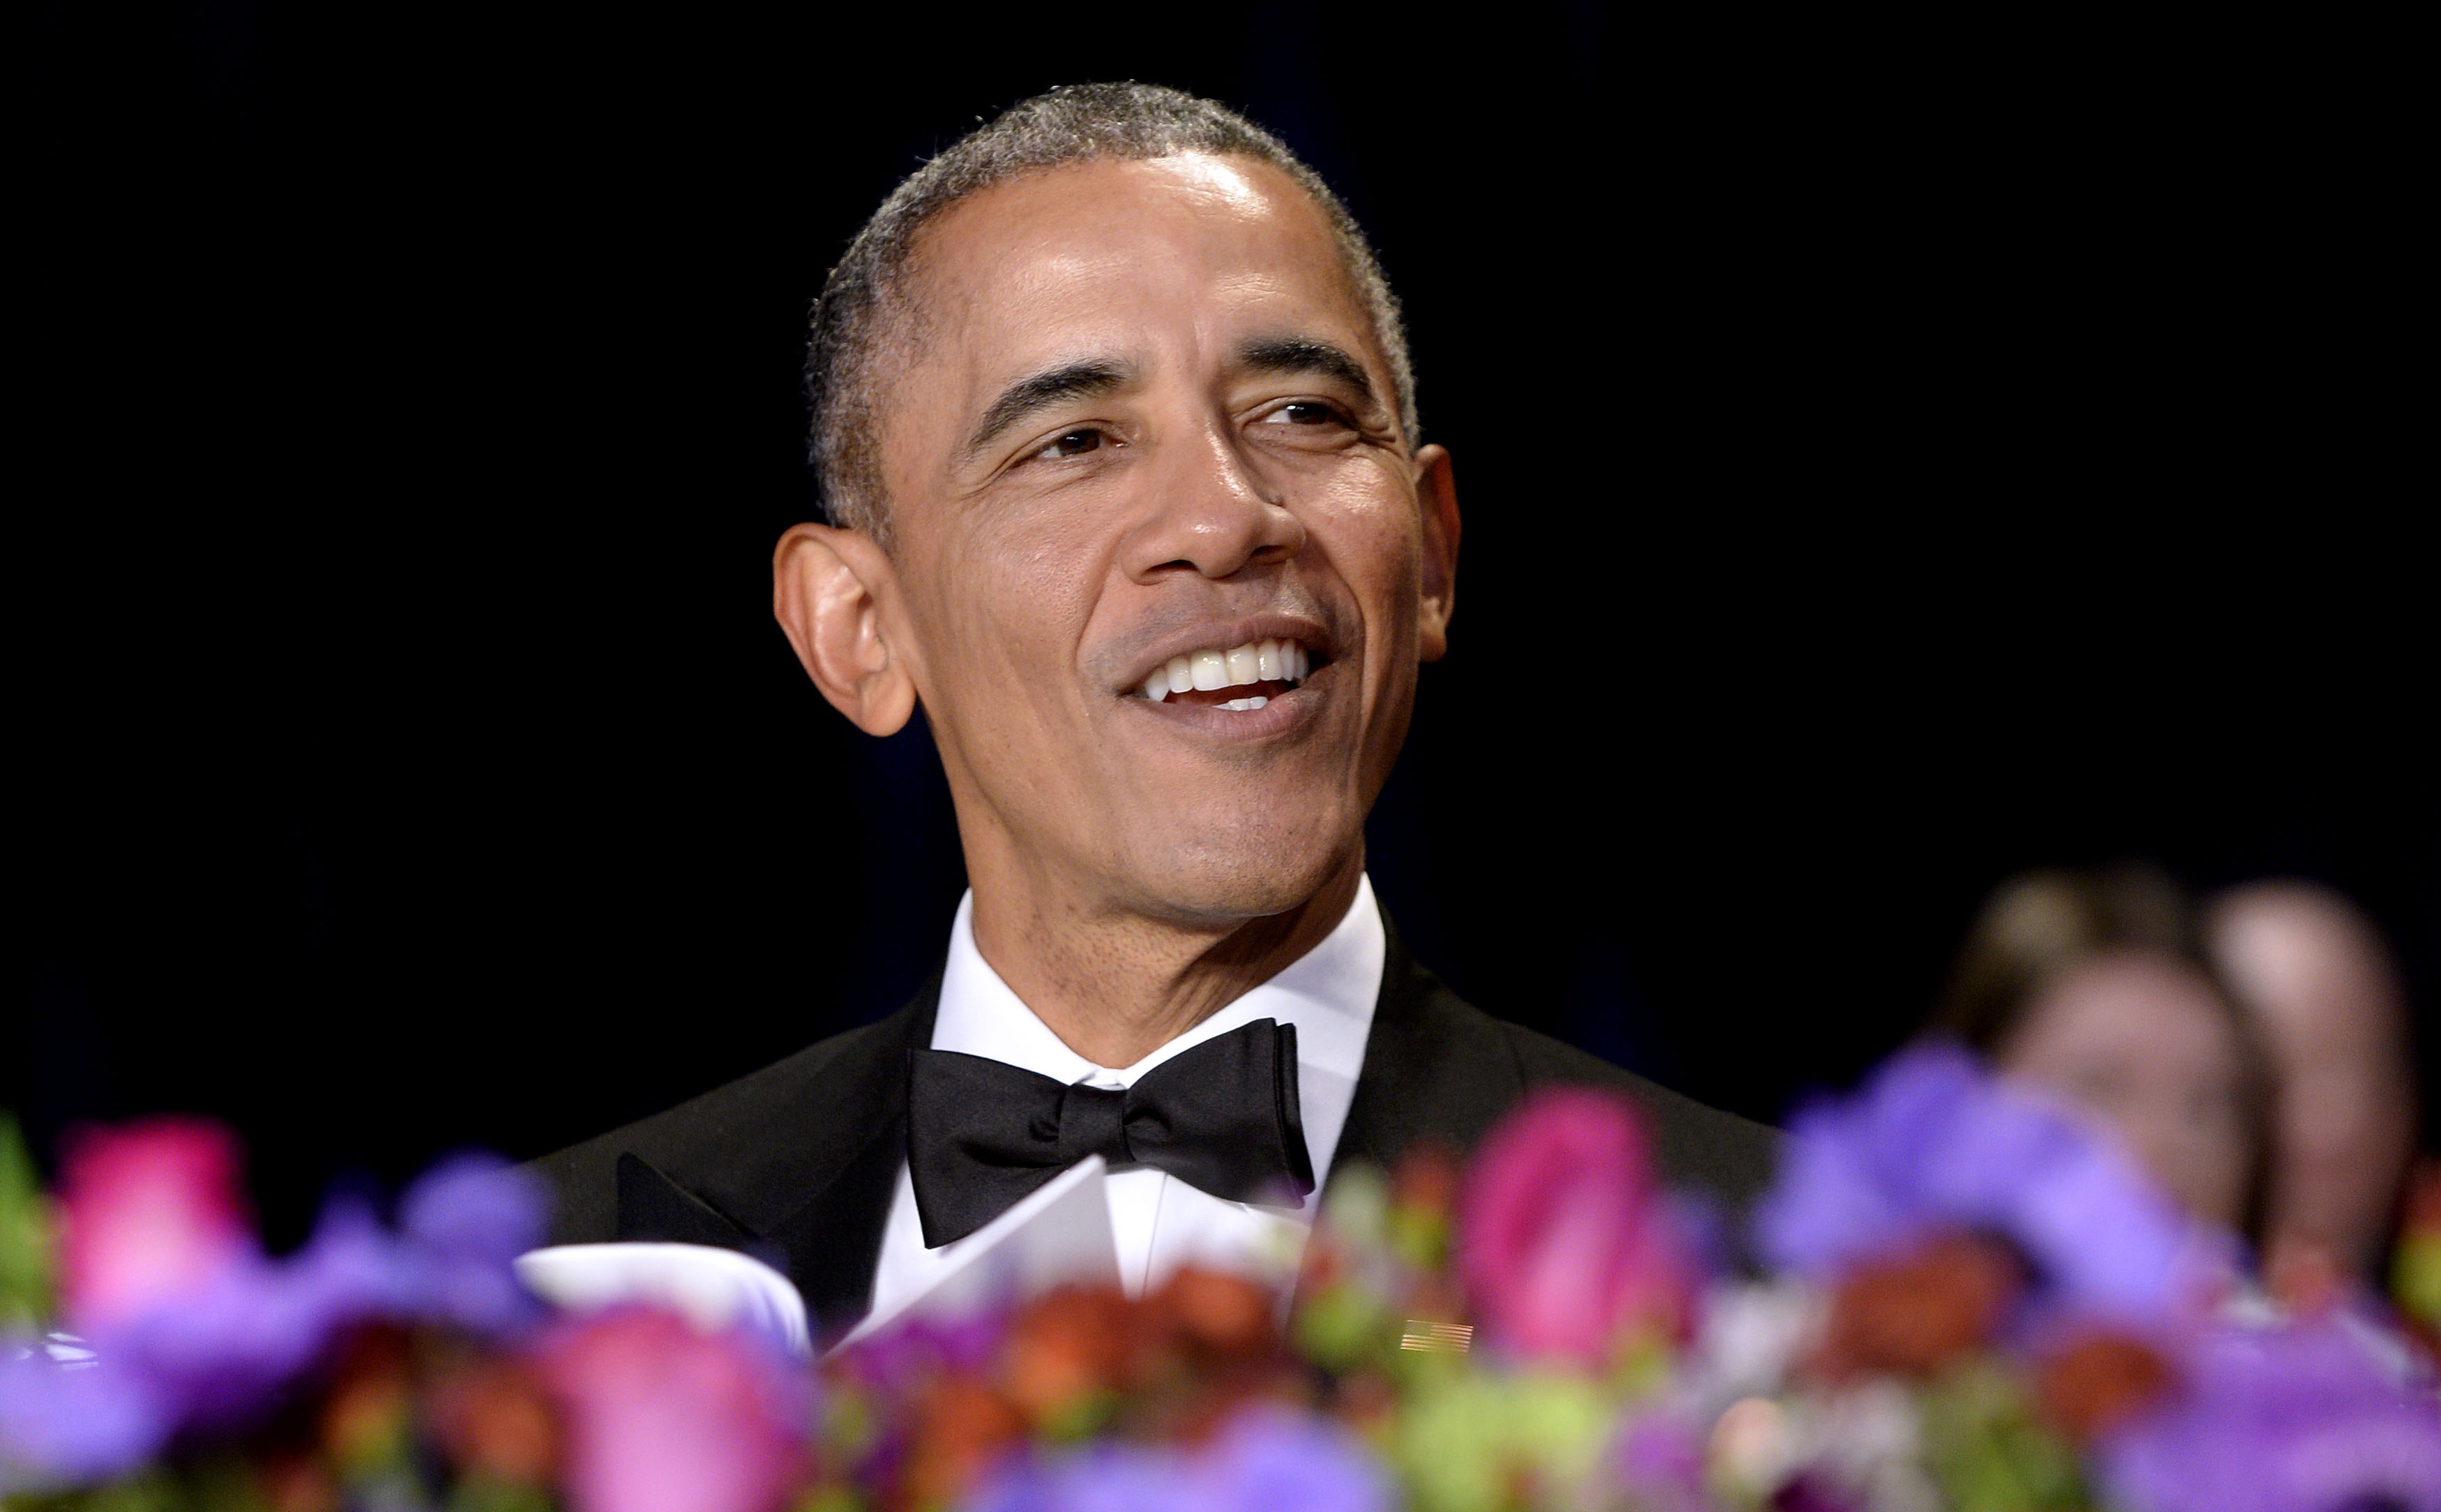 President Barack Obama speaks during the White House Correspondents' Association annual dinner at the Washington Hilton hotel in Washington, D.C., on April 30, 2016.